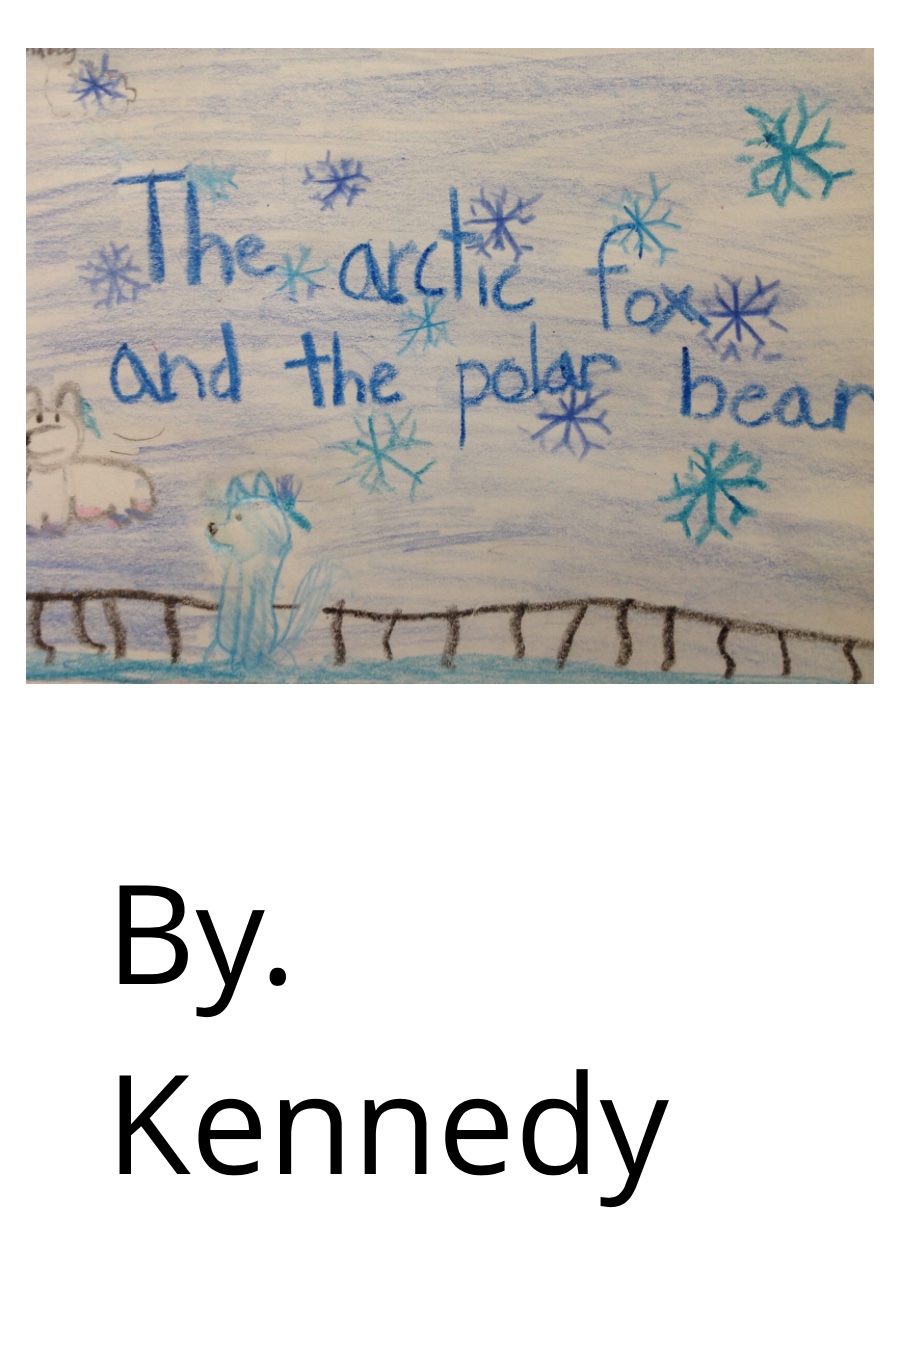 The Arctic Fox and the Polar Bear by Kennedy L